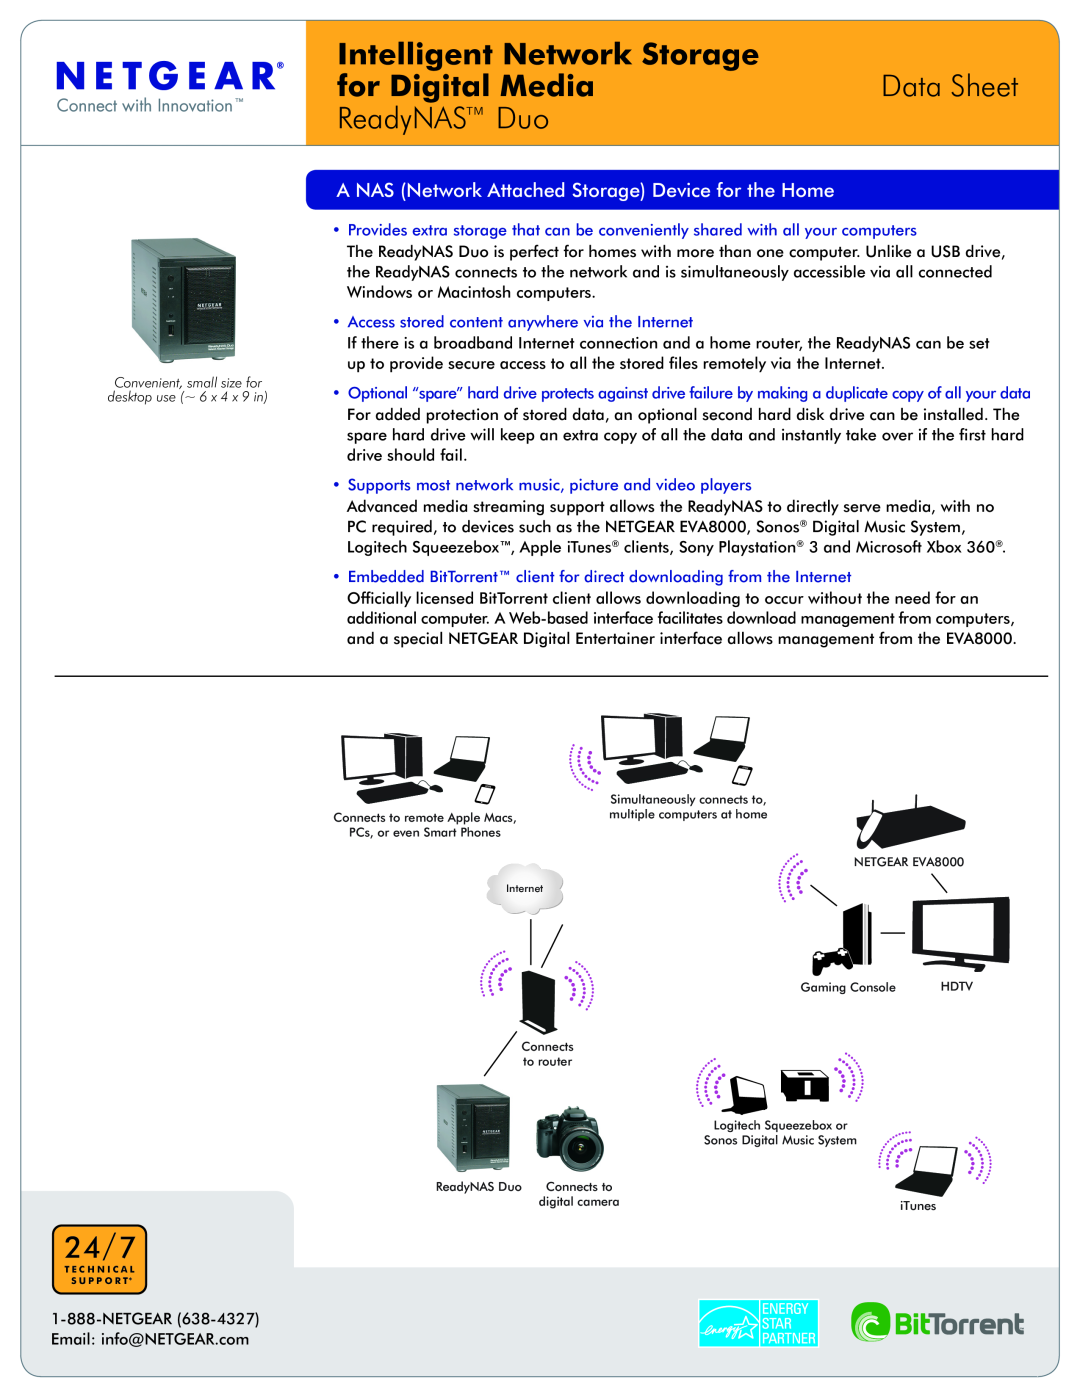 NETGEAR Cable Box manual Intelligent Network Storage, for Digital MediaData Sheet ReadyNAS Duo, 24/7 